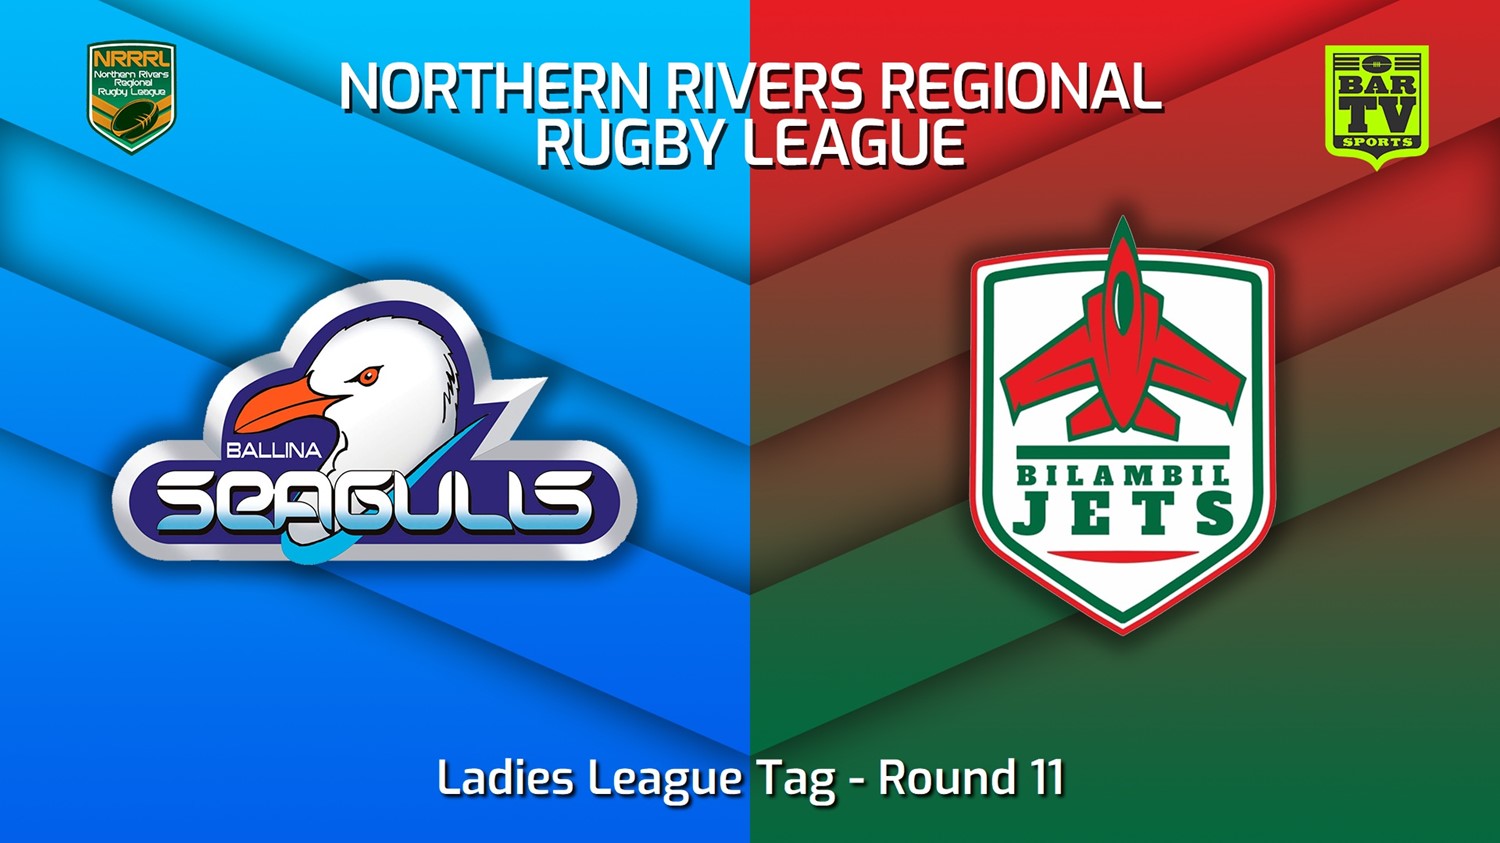 220710-Northern Rivers Round 11 - Ladies League Tag - Ballina Seagulls v Bilambil Jets Slate Image